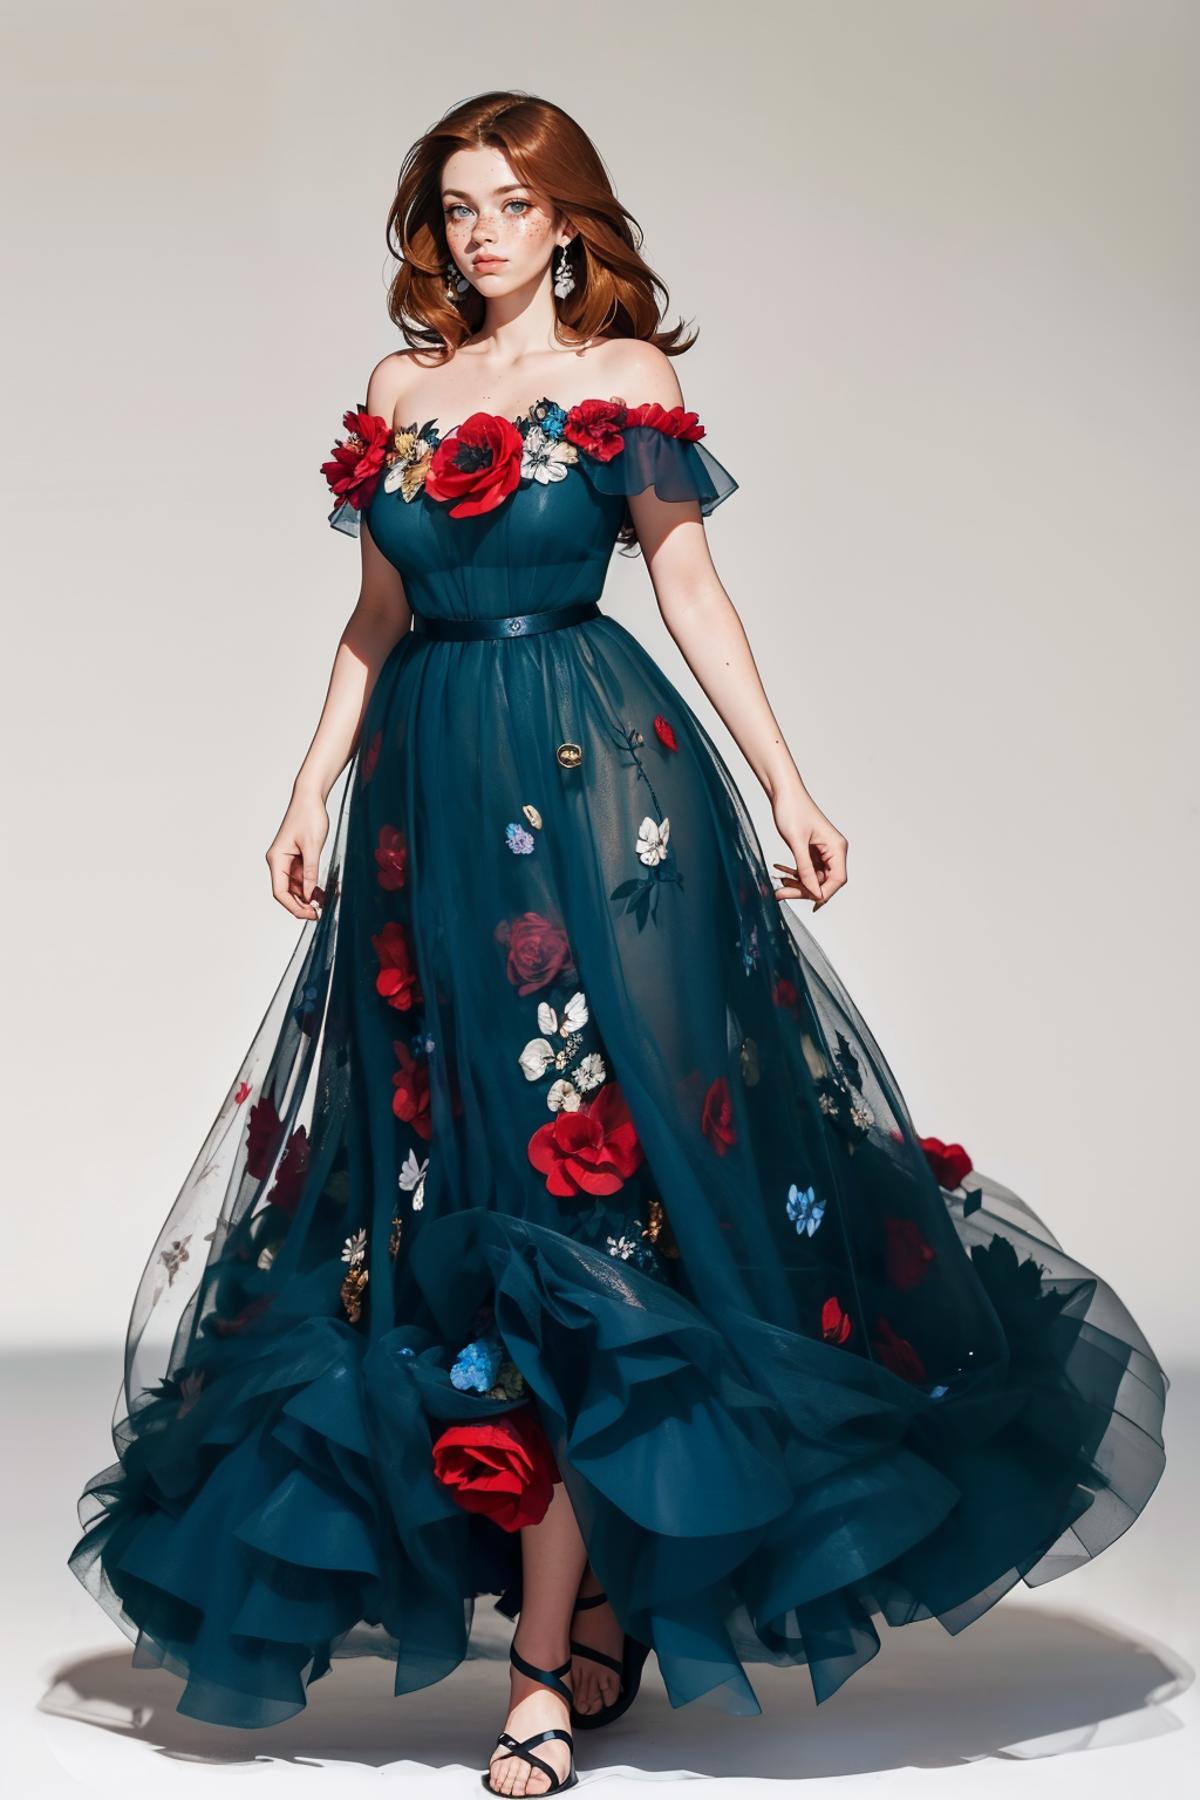 Blue & Flower Dress image by freckledvixon